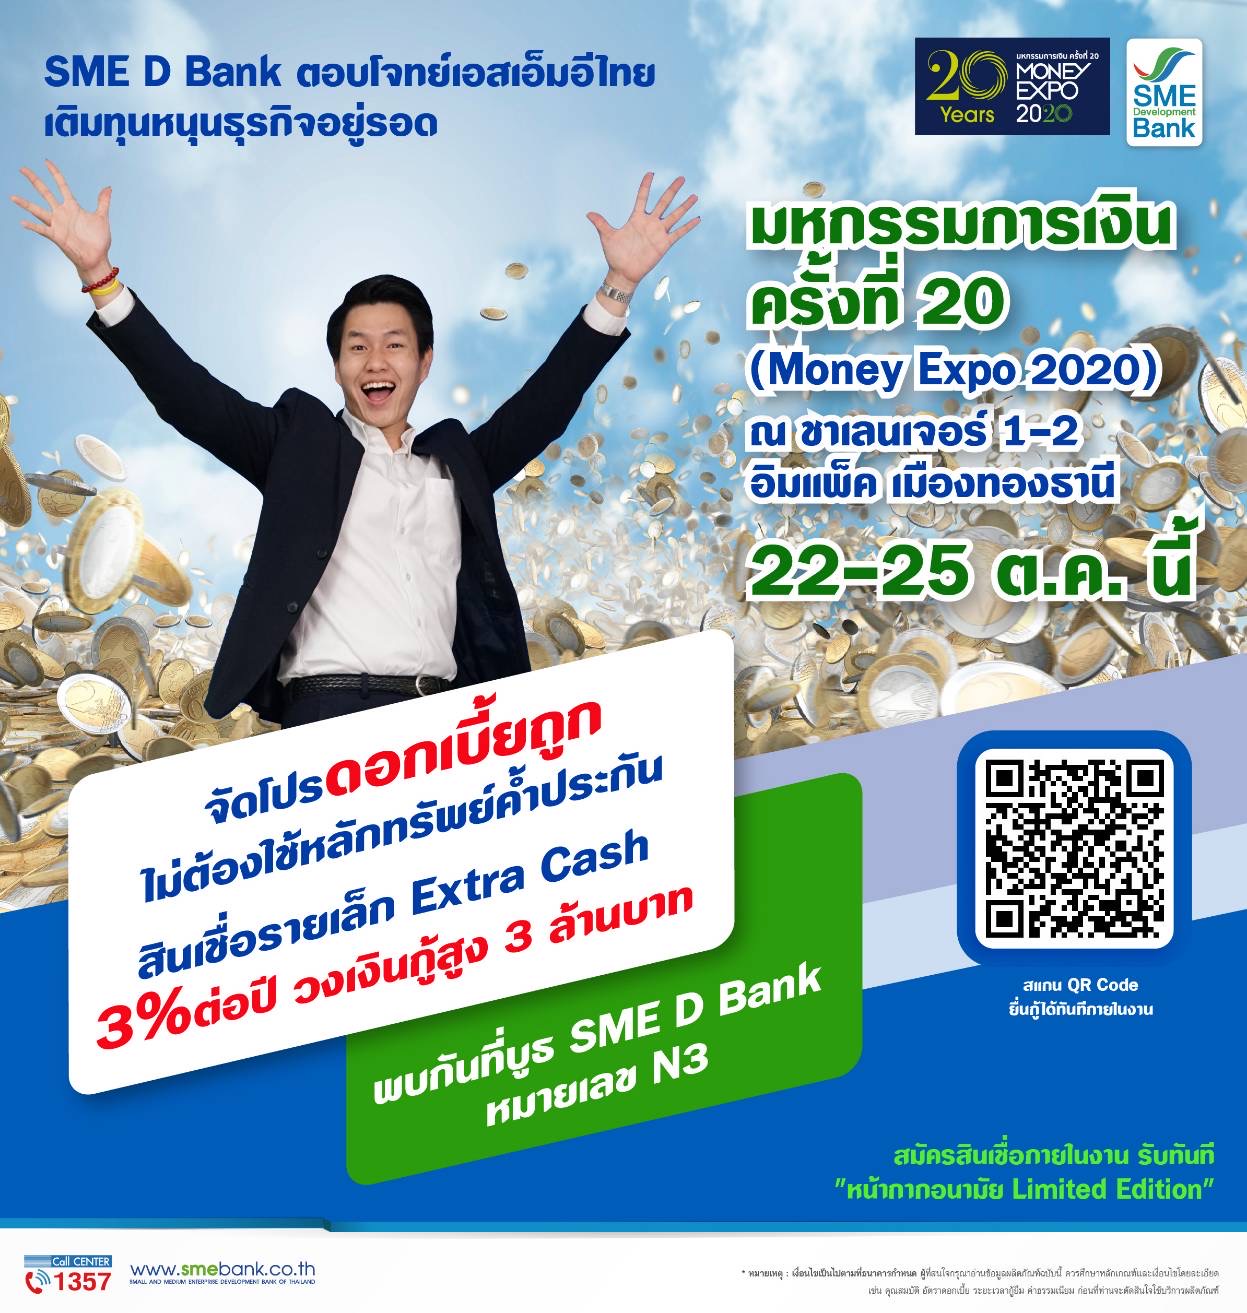 SME D Bank จัดโปรเด็ดเพื่อเอสเอ็มอีไทยในงาน ‘Money Expo 2020’ สินเชื่อดอกเบี้ยถูก 3%ต่อปี